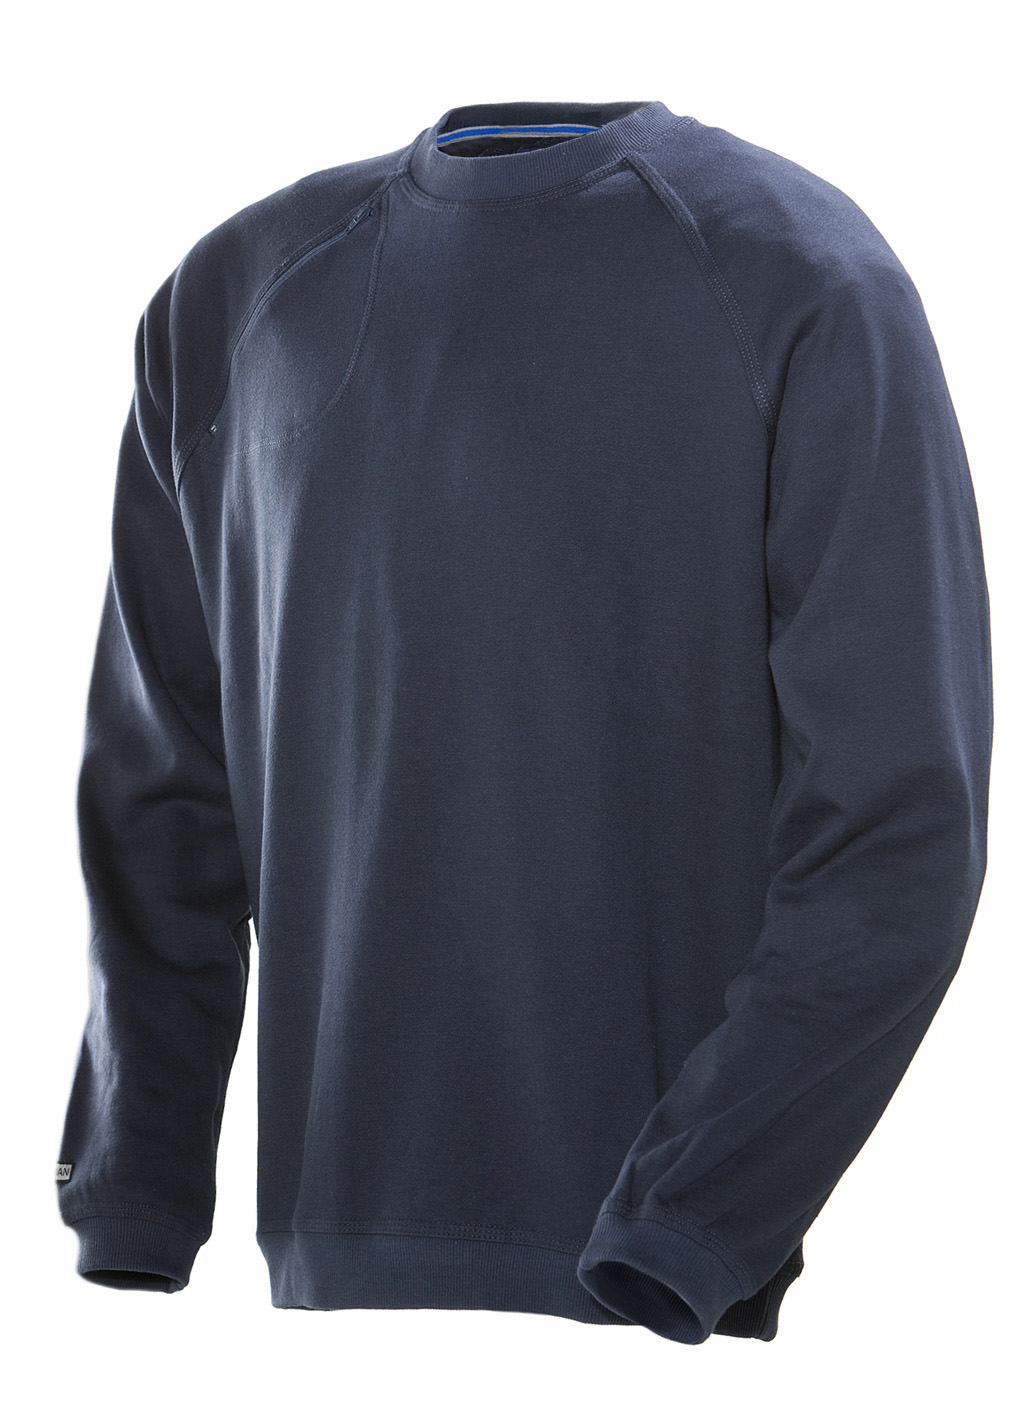 5122 Sweatshirt XL bleu marine